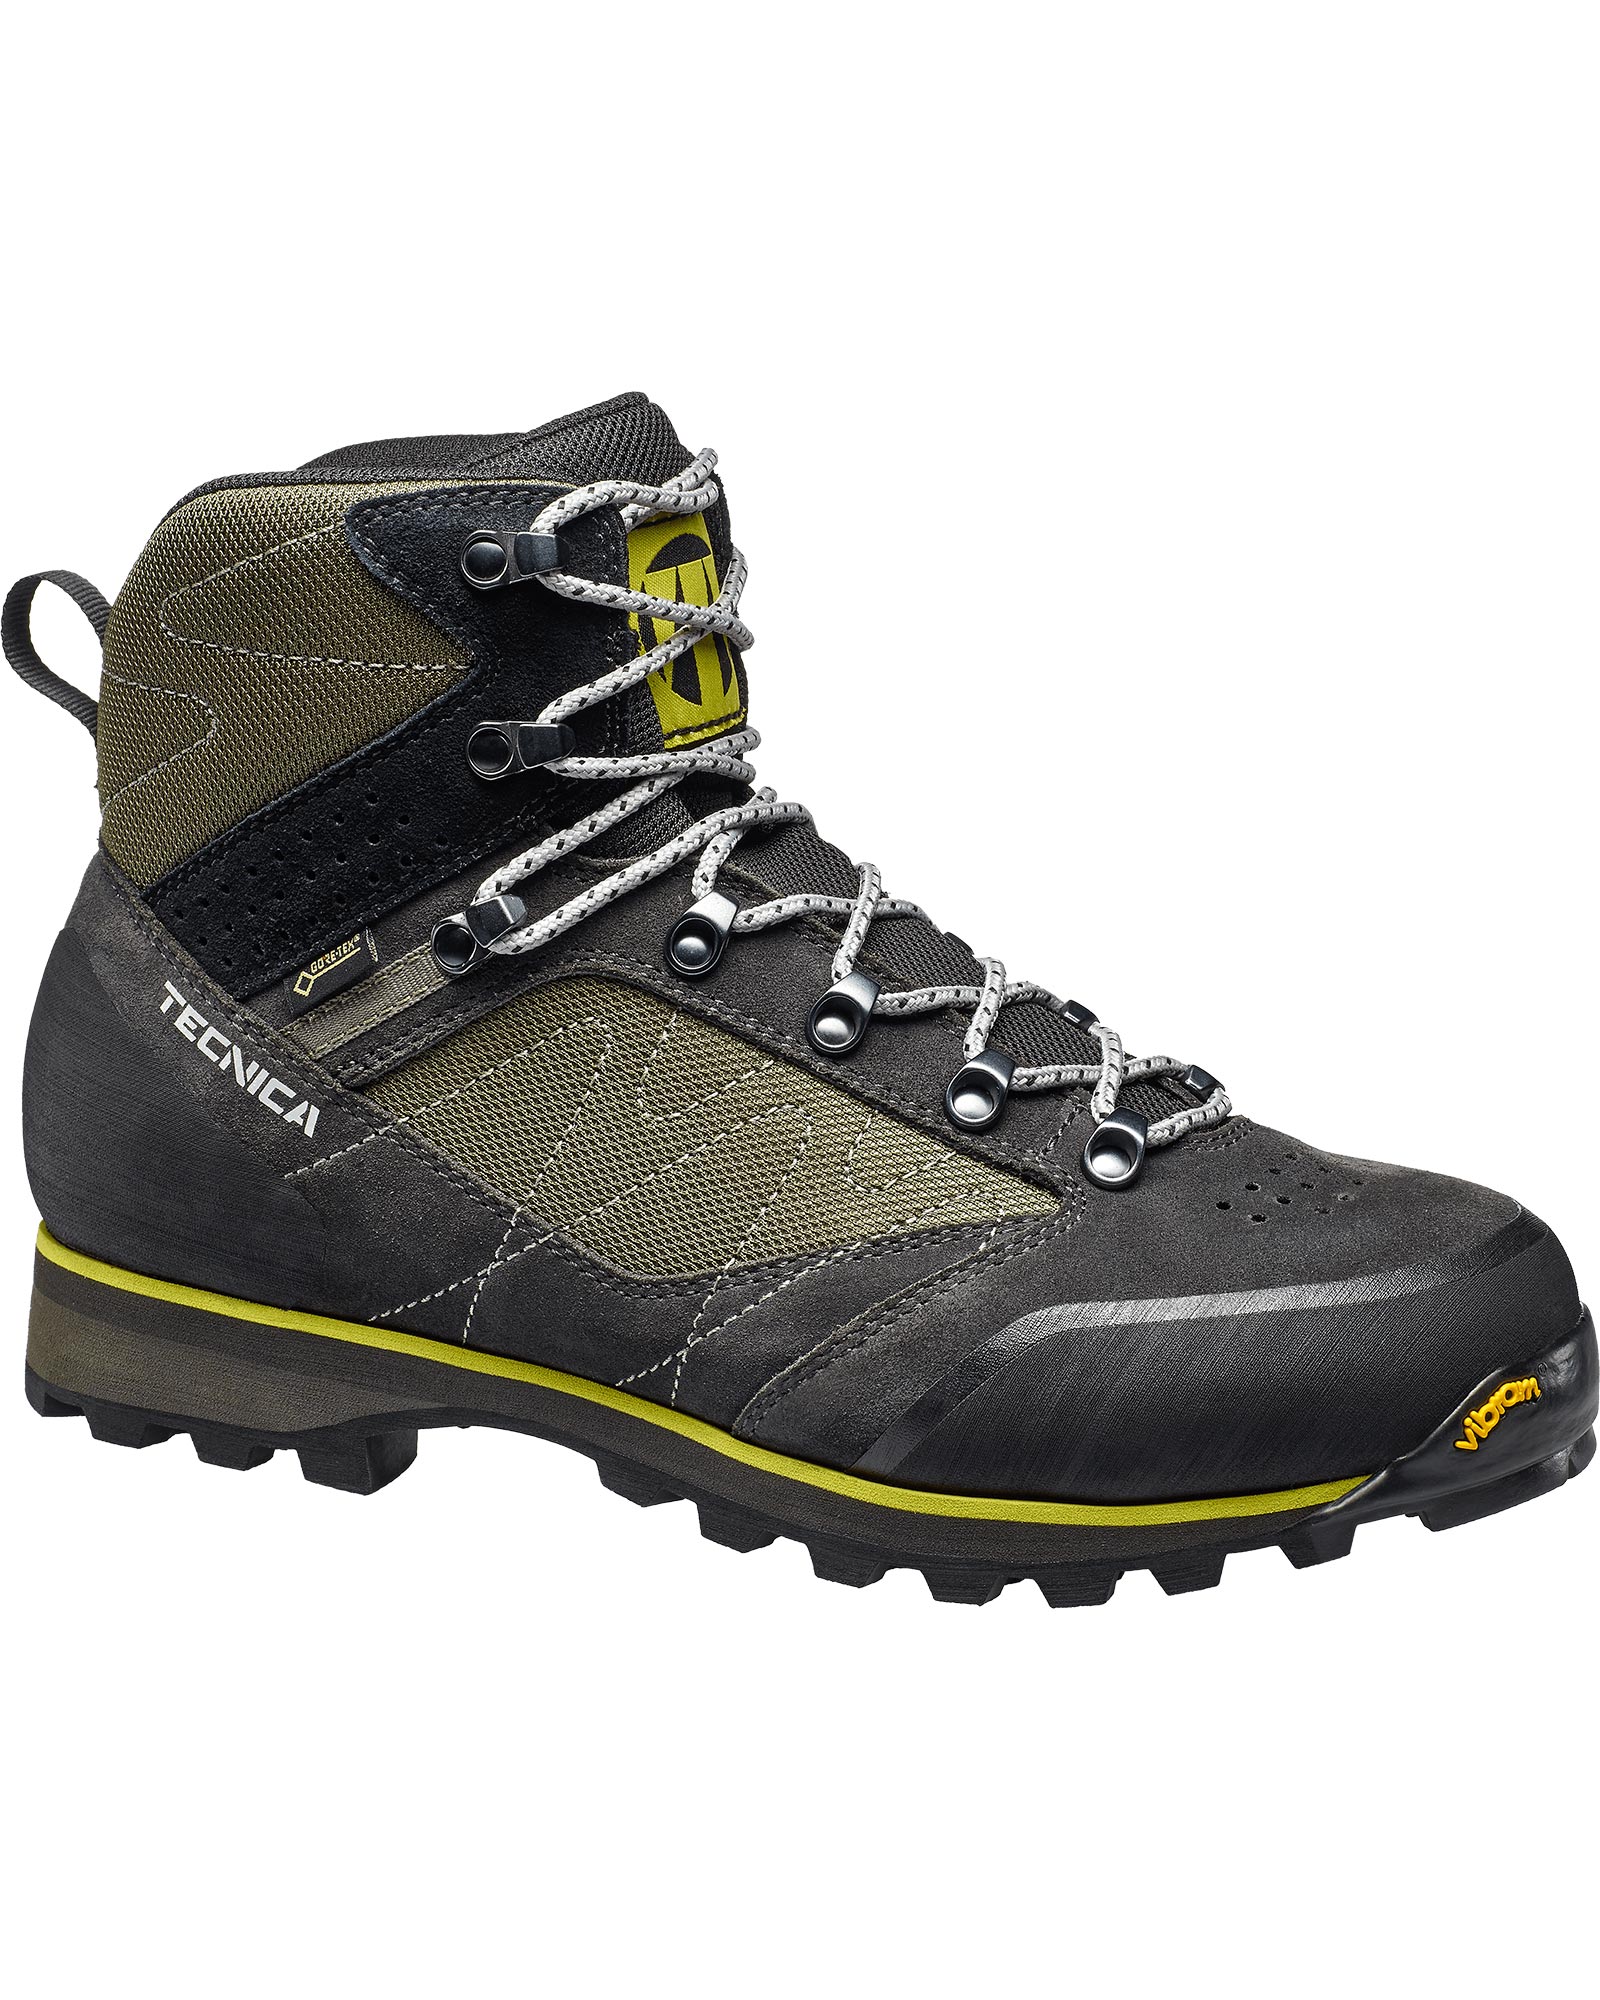 Tecnica Kilimanjaro II GORE TEX Men’s Boots - Shadow Giungla/Dusty Campo UK 10.5